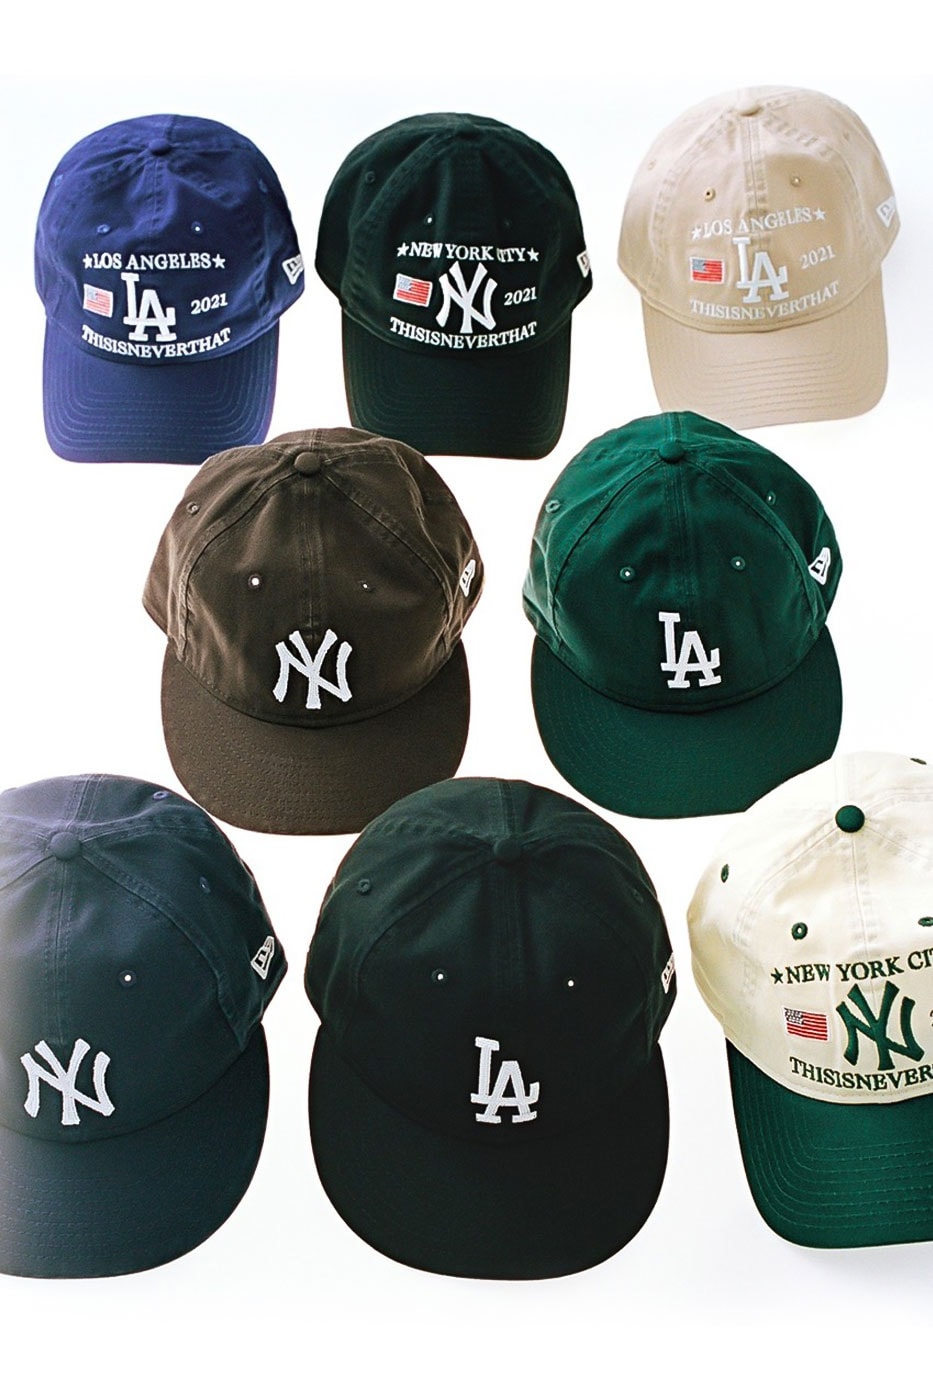 thisisneverthat new era cap hat headwear baseball cap bucket hat beanies panel caps matching apparel crew neck sweatshirt hoodies release info